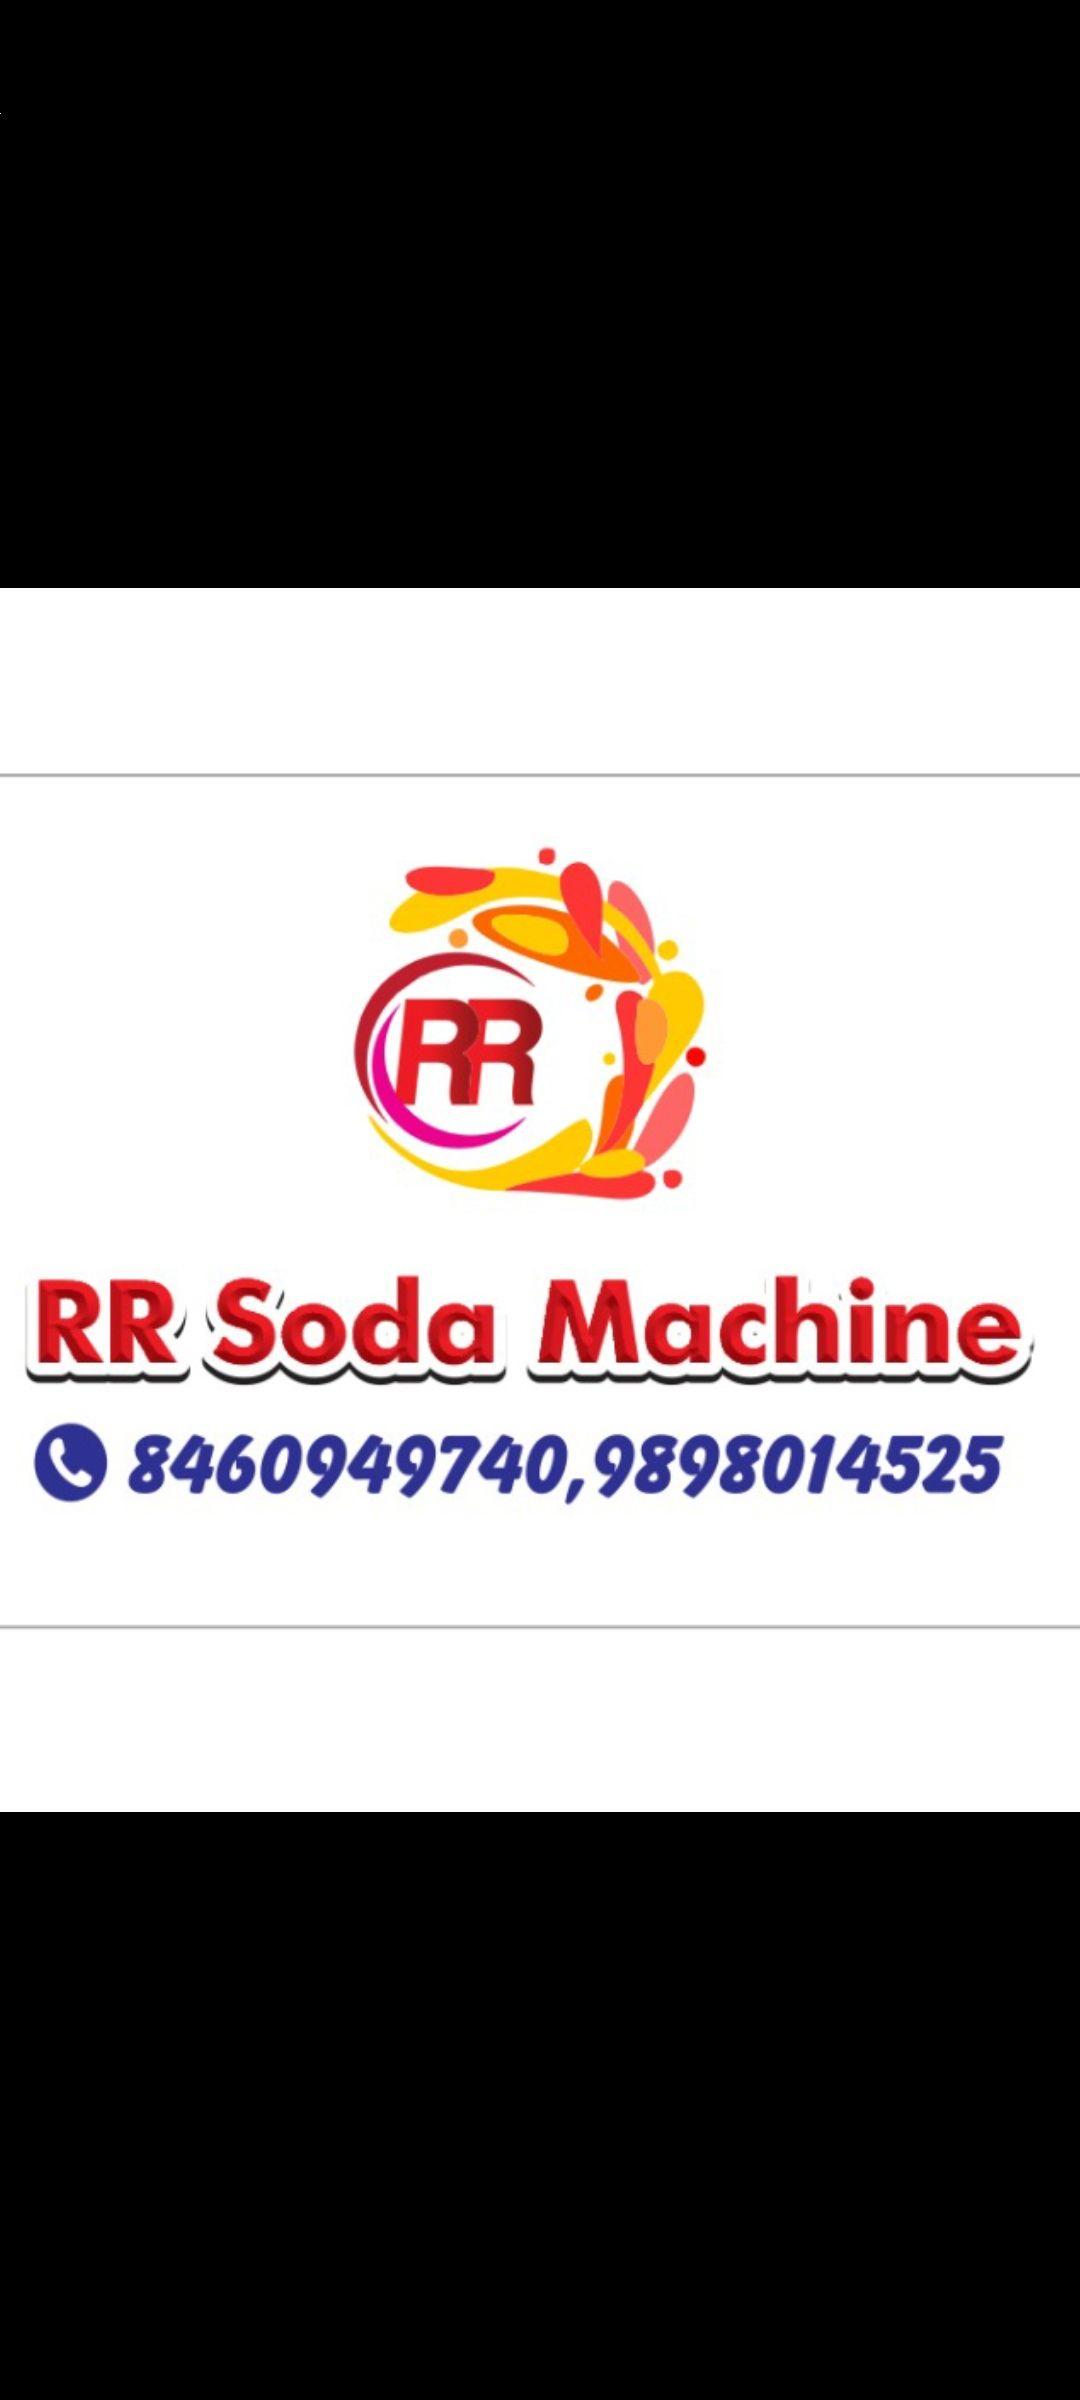 RR Soda Machine